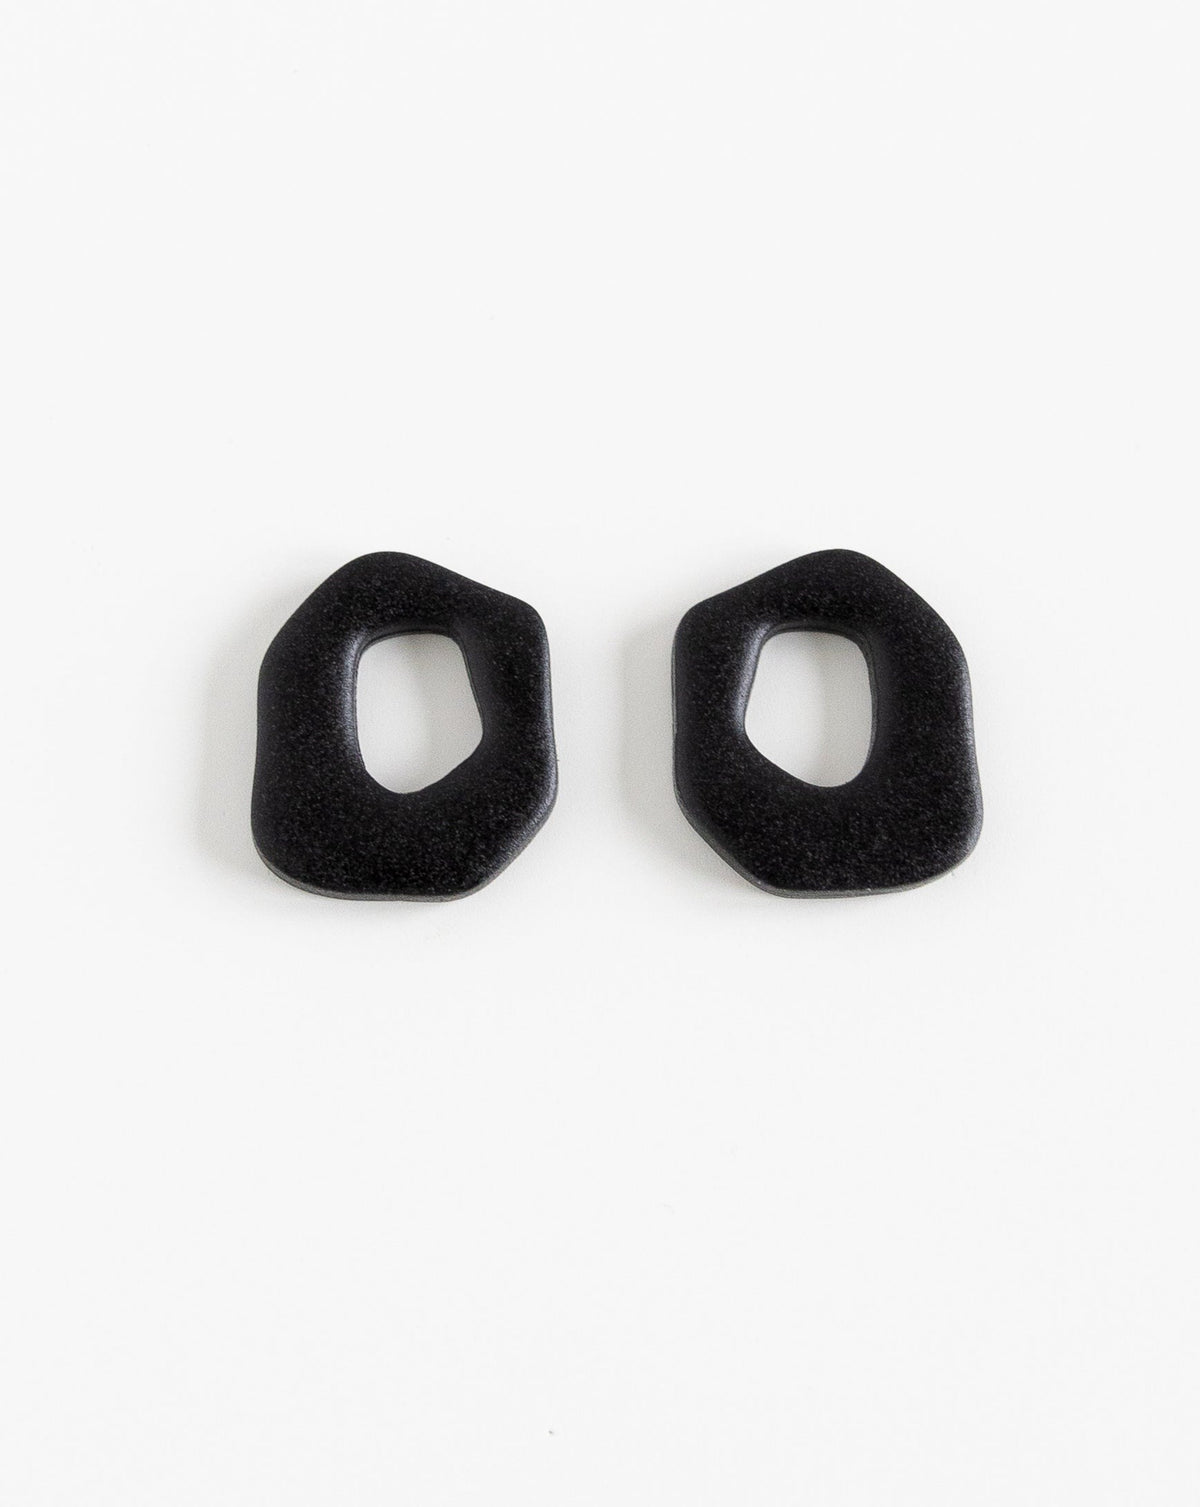 Close up of Darien Beads in Black color